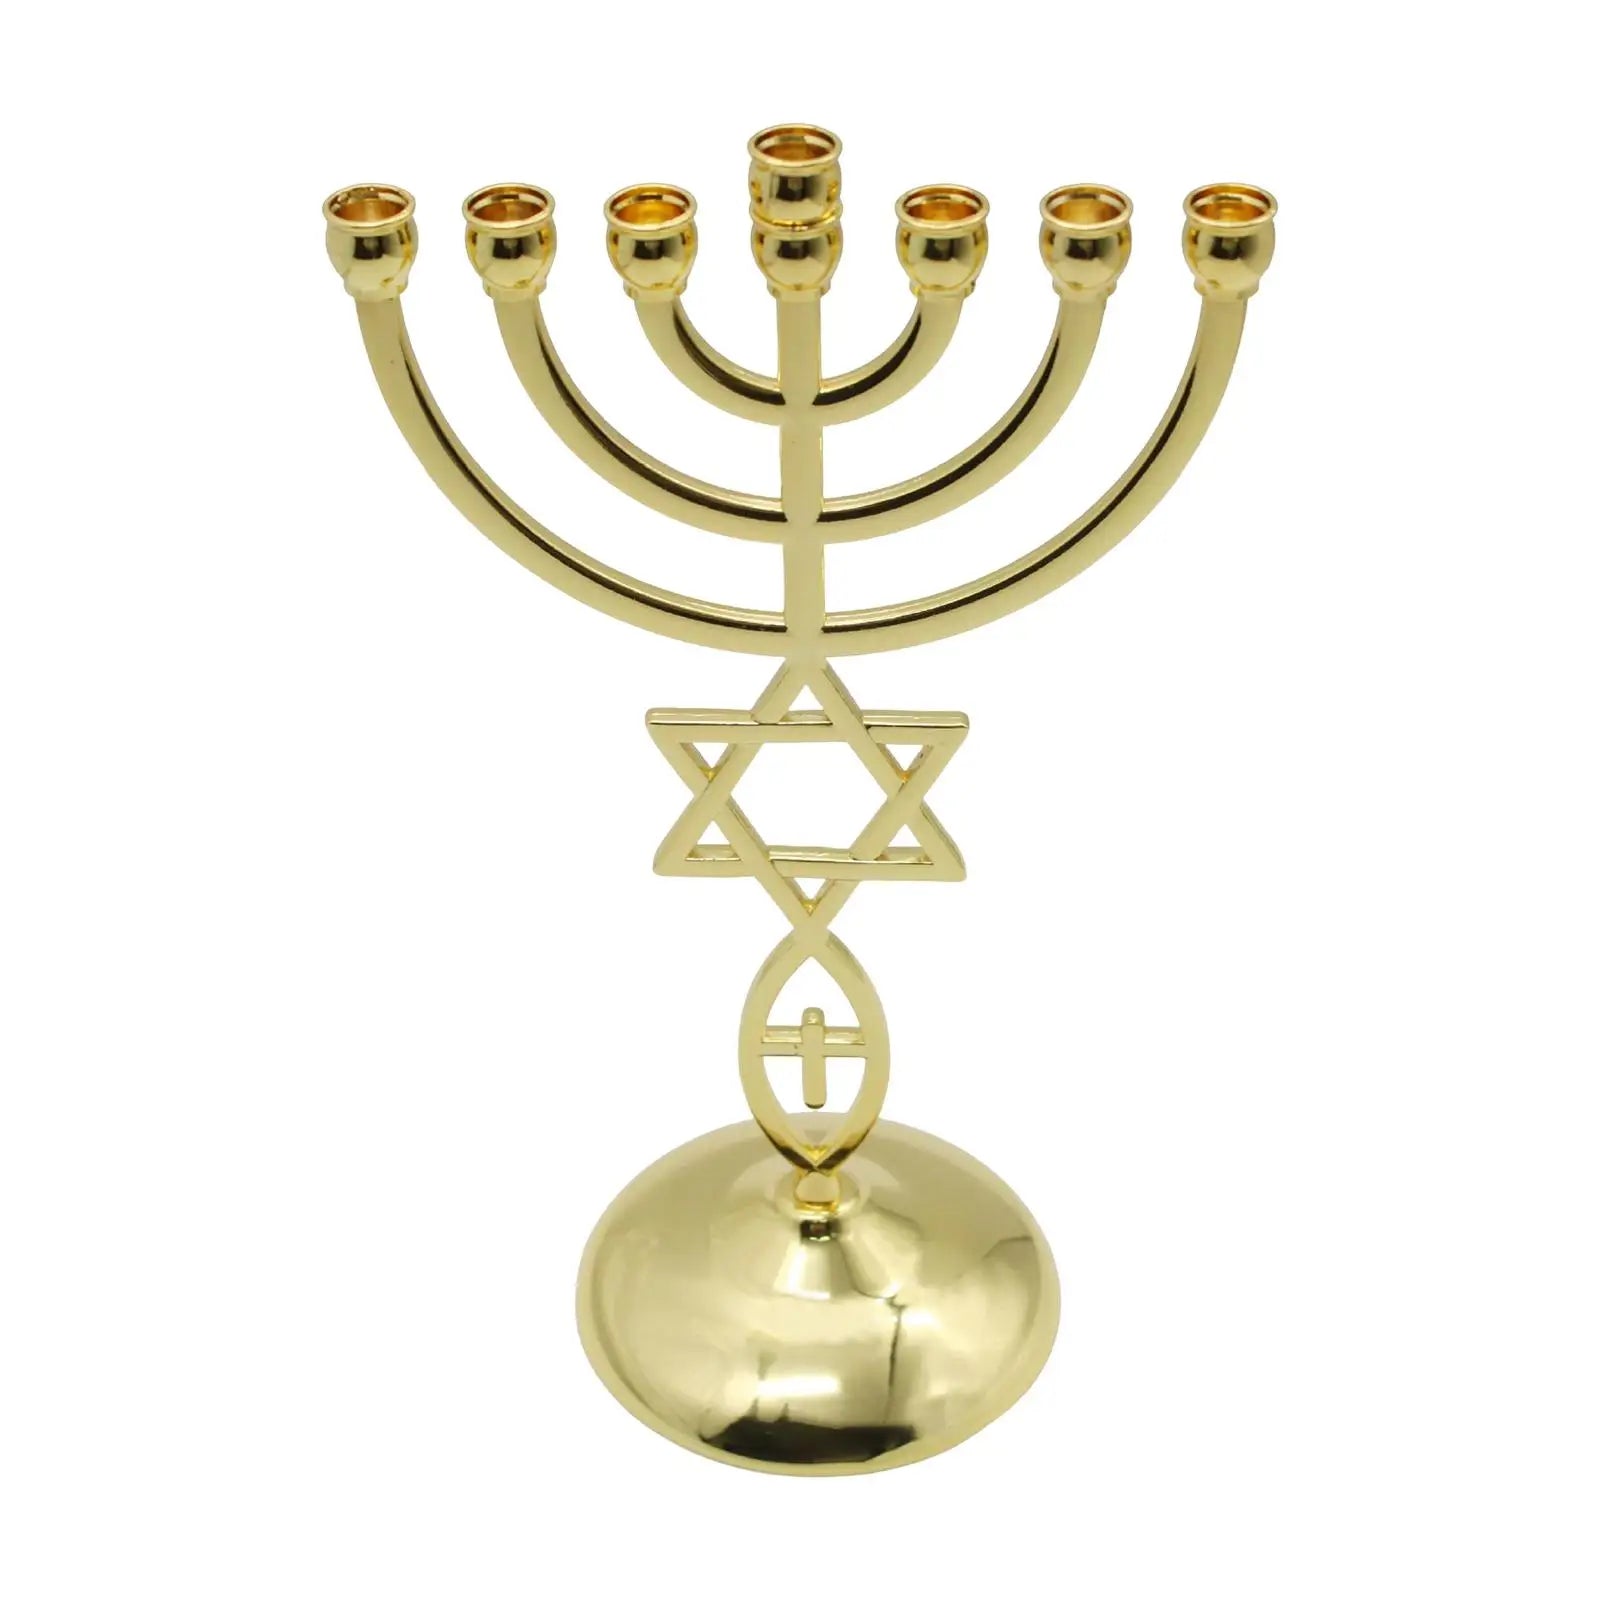 Ancient Israel Candle Holder - Candlestick Metal Candle Holder 7 Branch Antique Designed Height 21cm - Bricks Masons